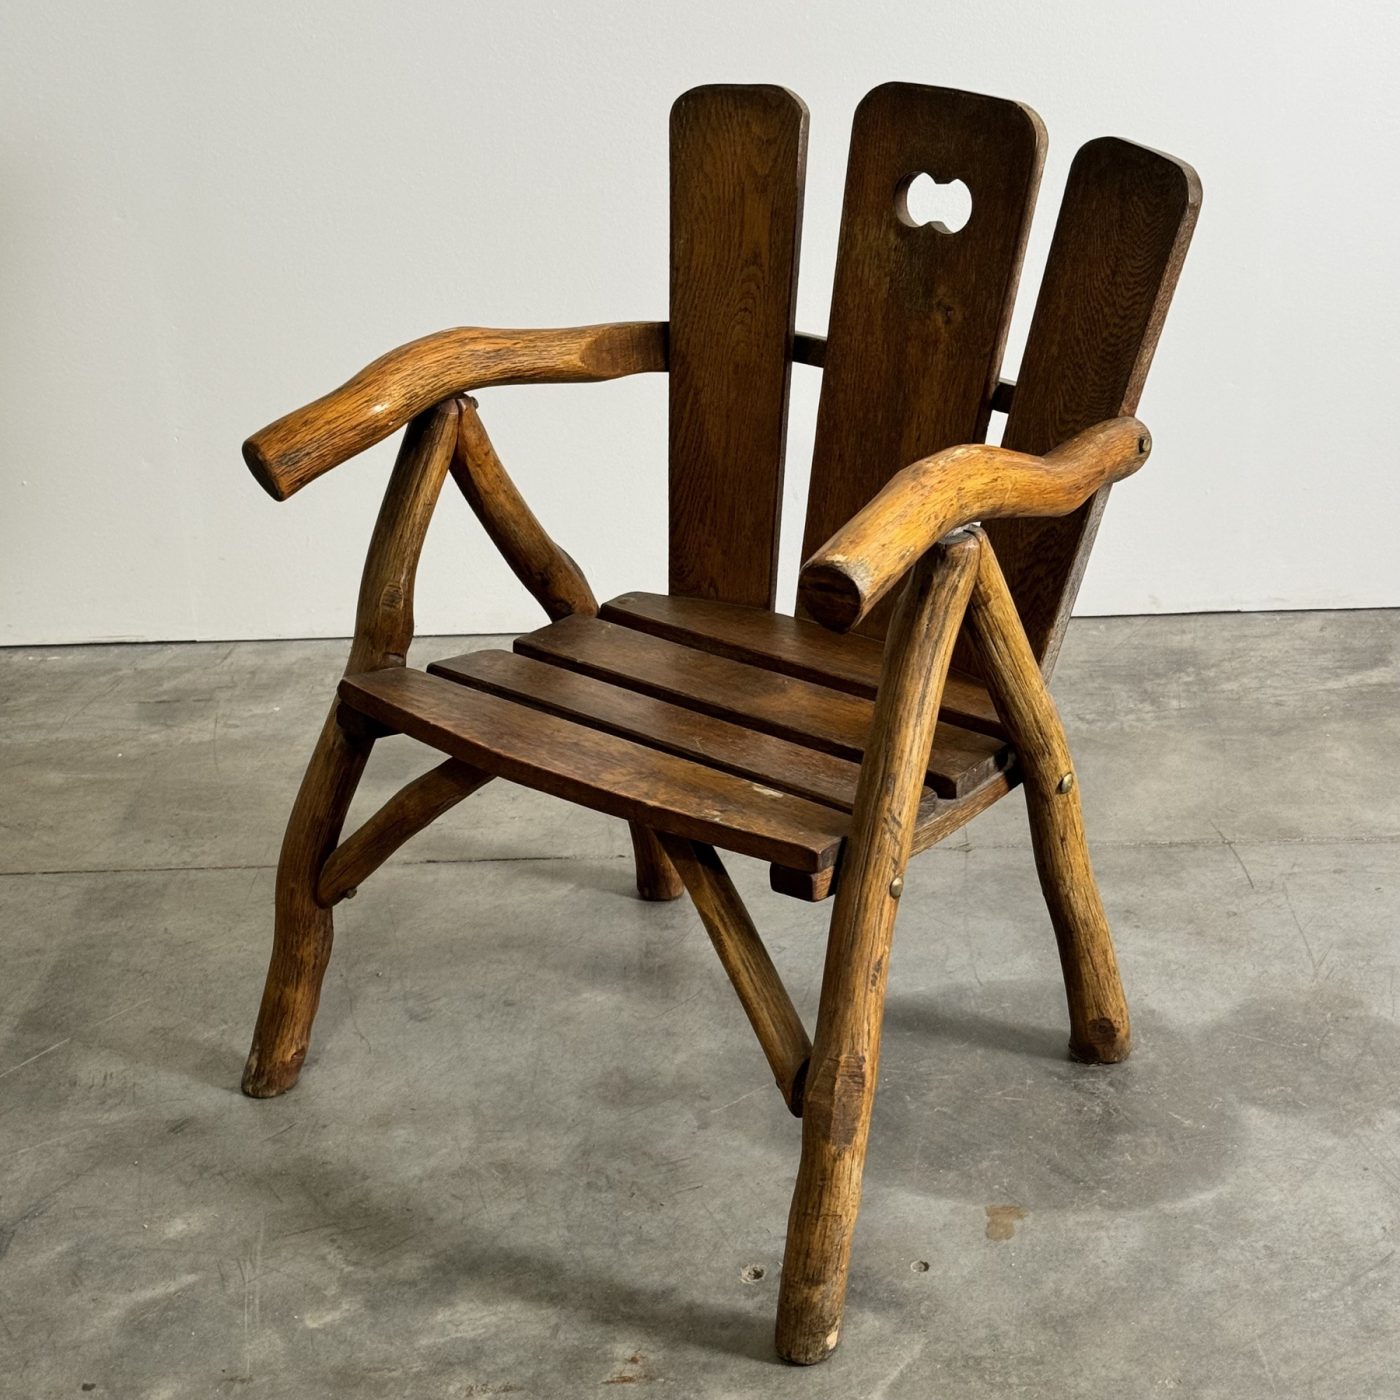 objet-vagabond-wooden-armchairs0005